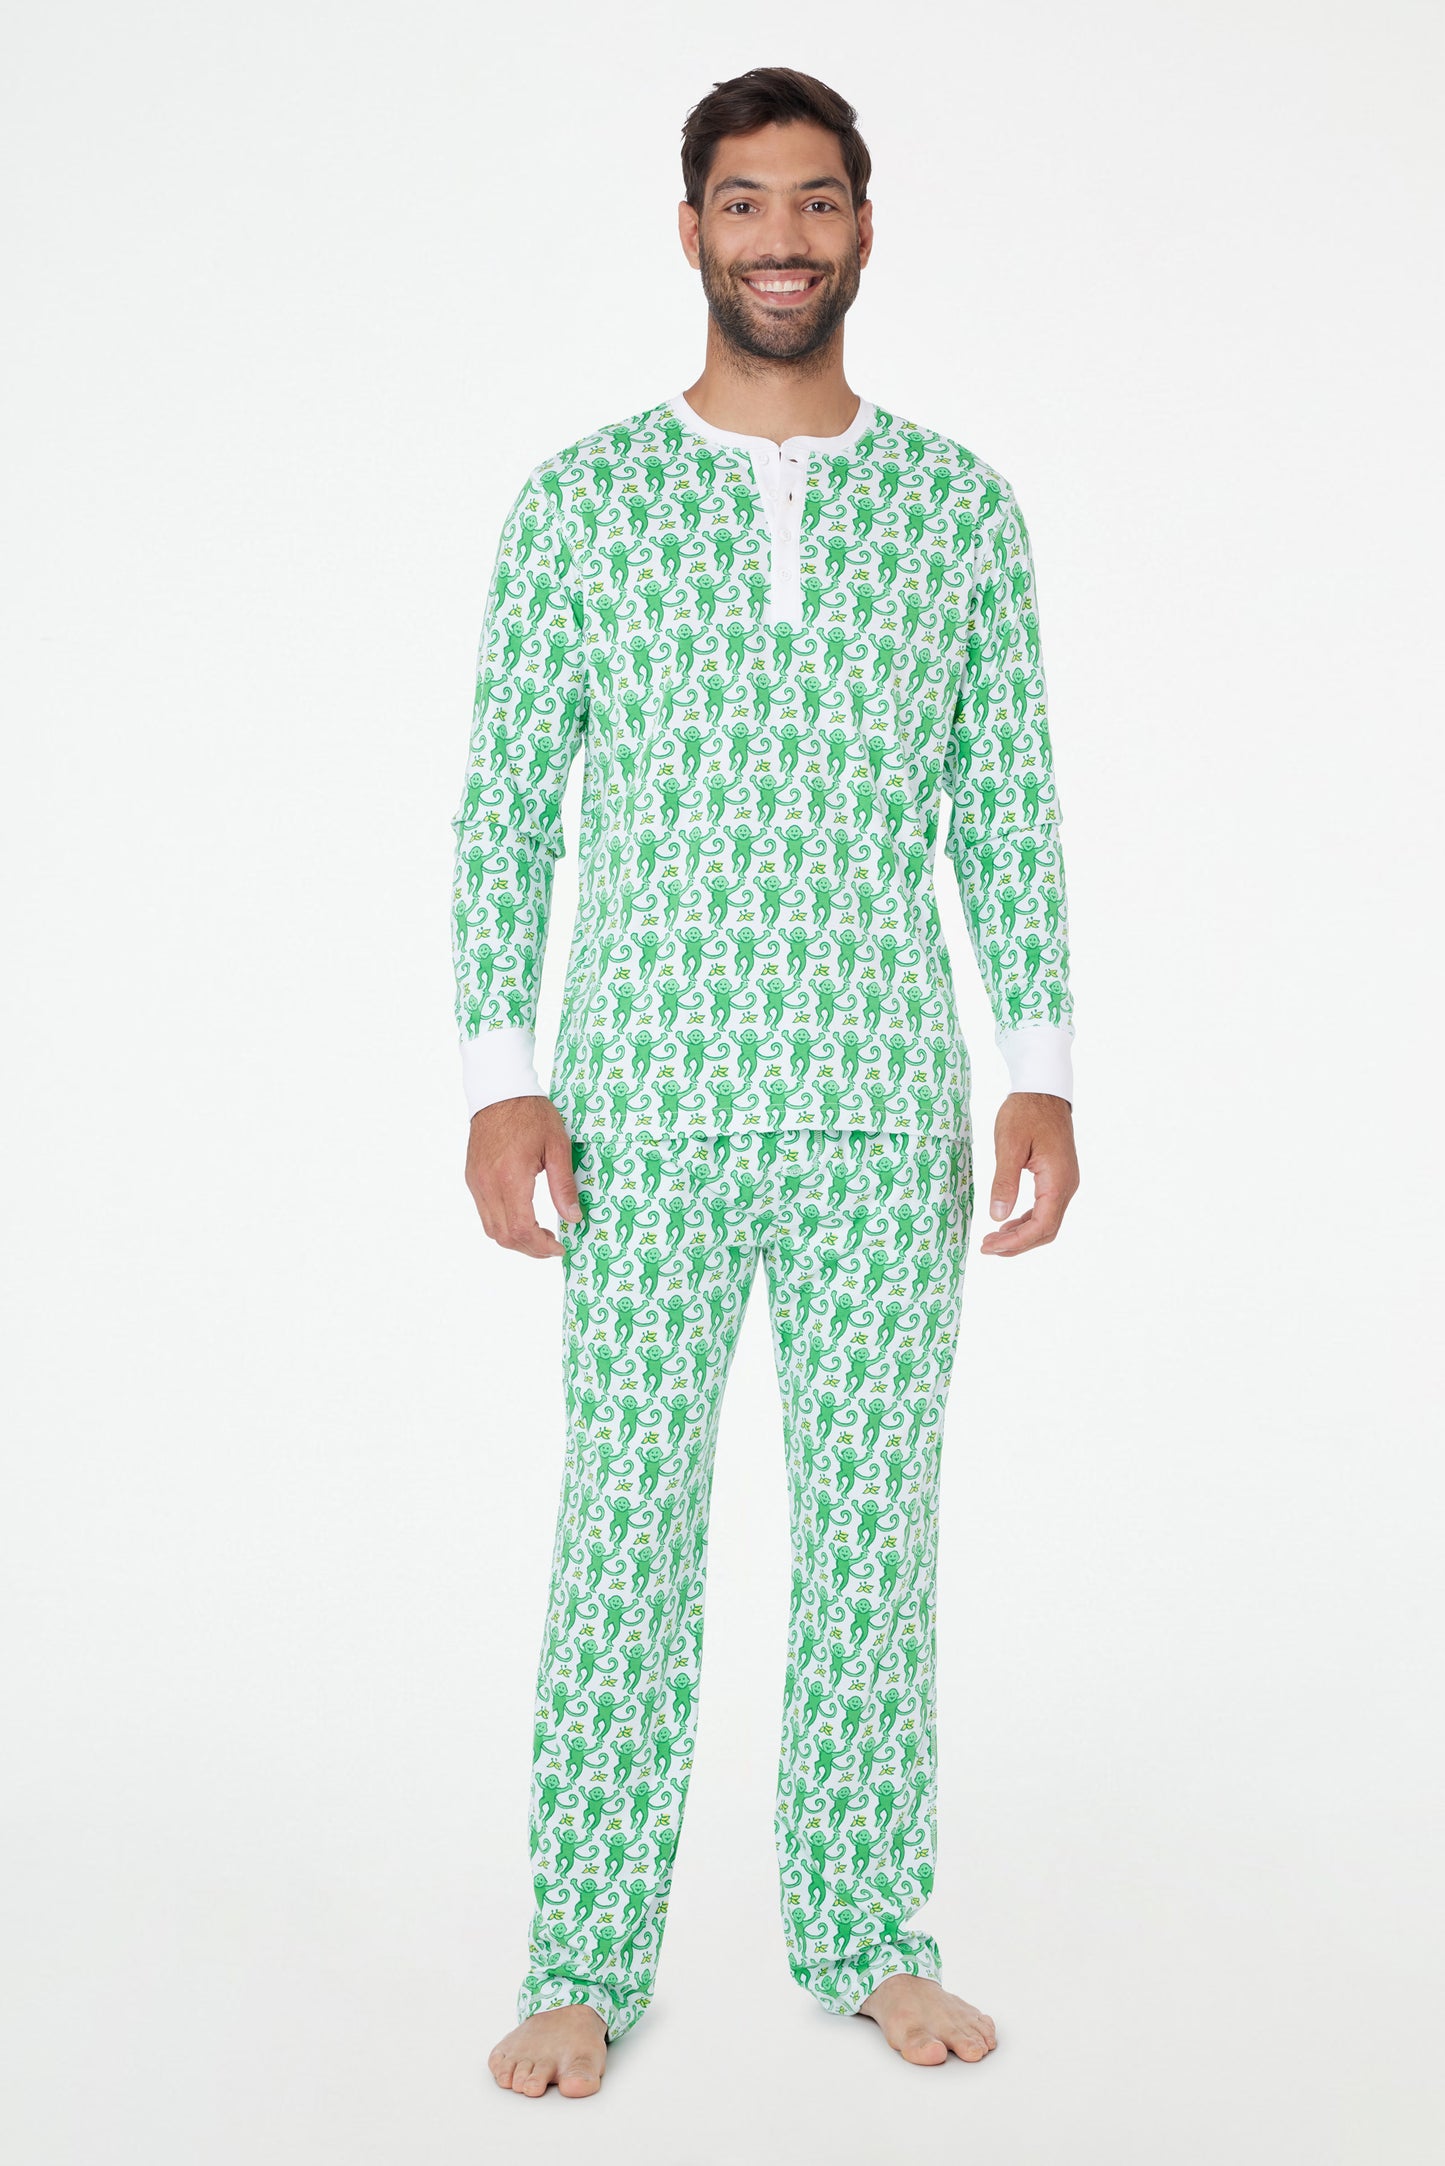 Roller Rabbit Men's Emerald Monkey Spencer Pajamas 